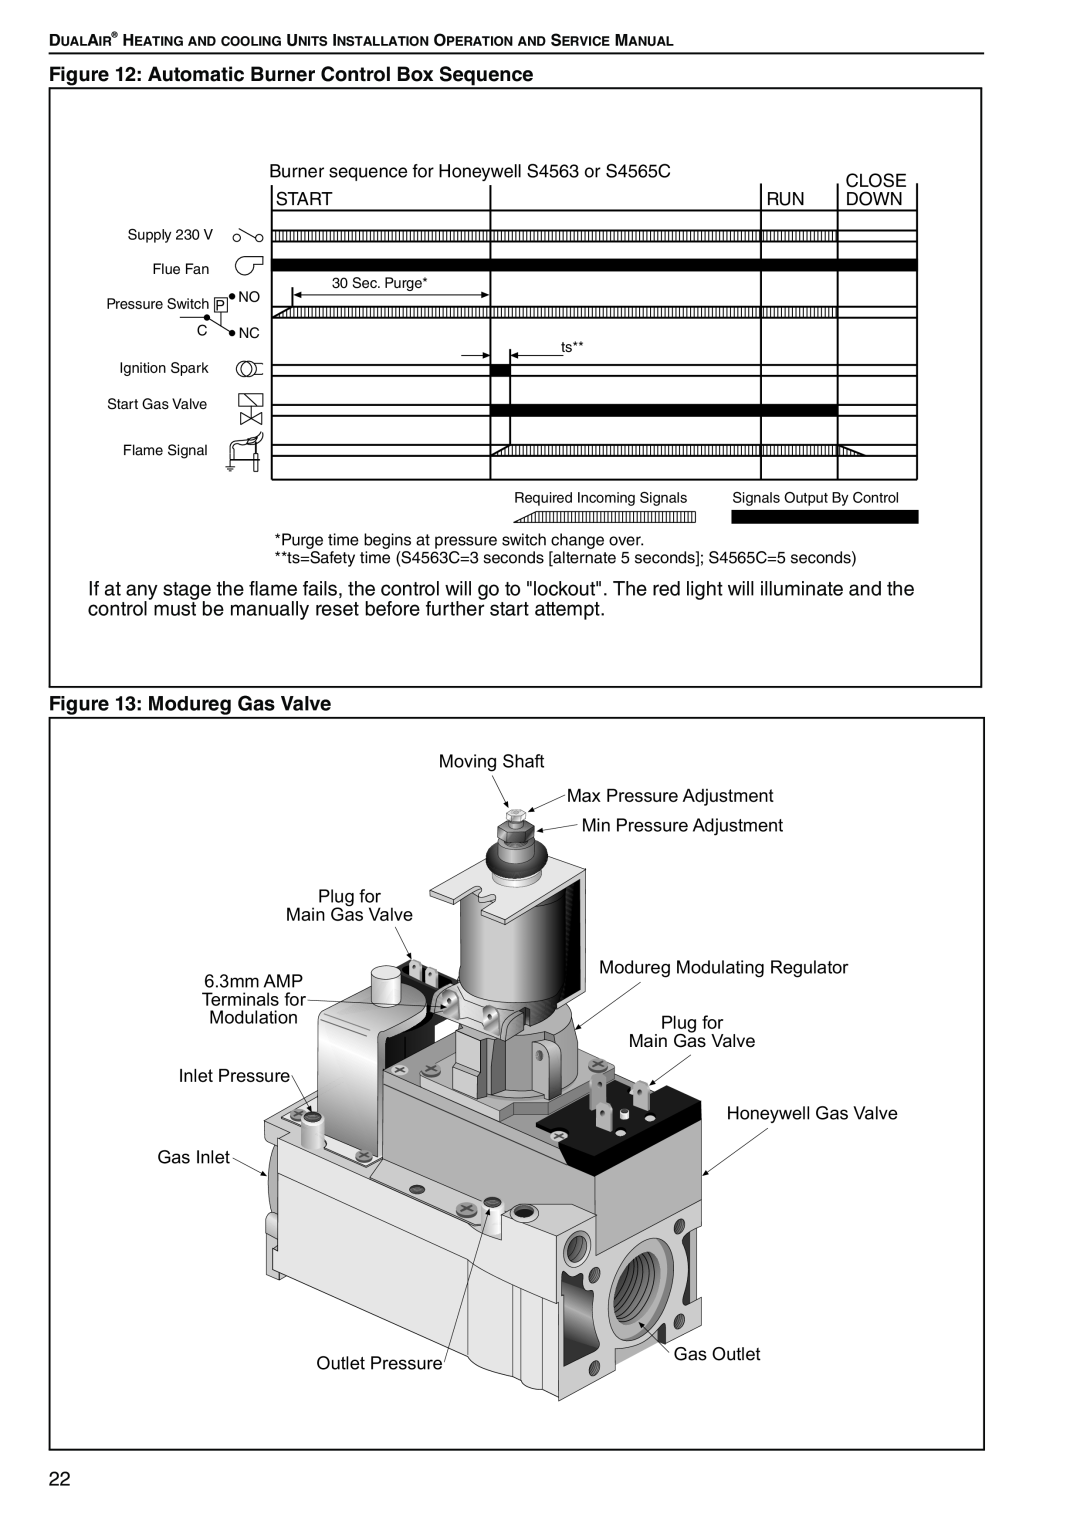 Roberts Gorden DAT75, DAT90, DAT100, DAT115 service manual Automatic Burner Control Box Sequence, Modureg Gas Valve 